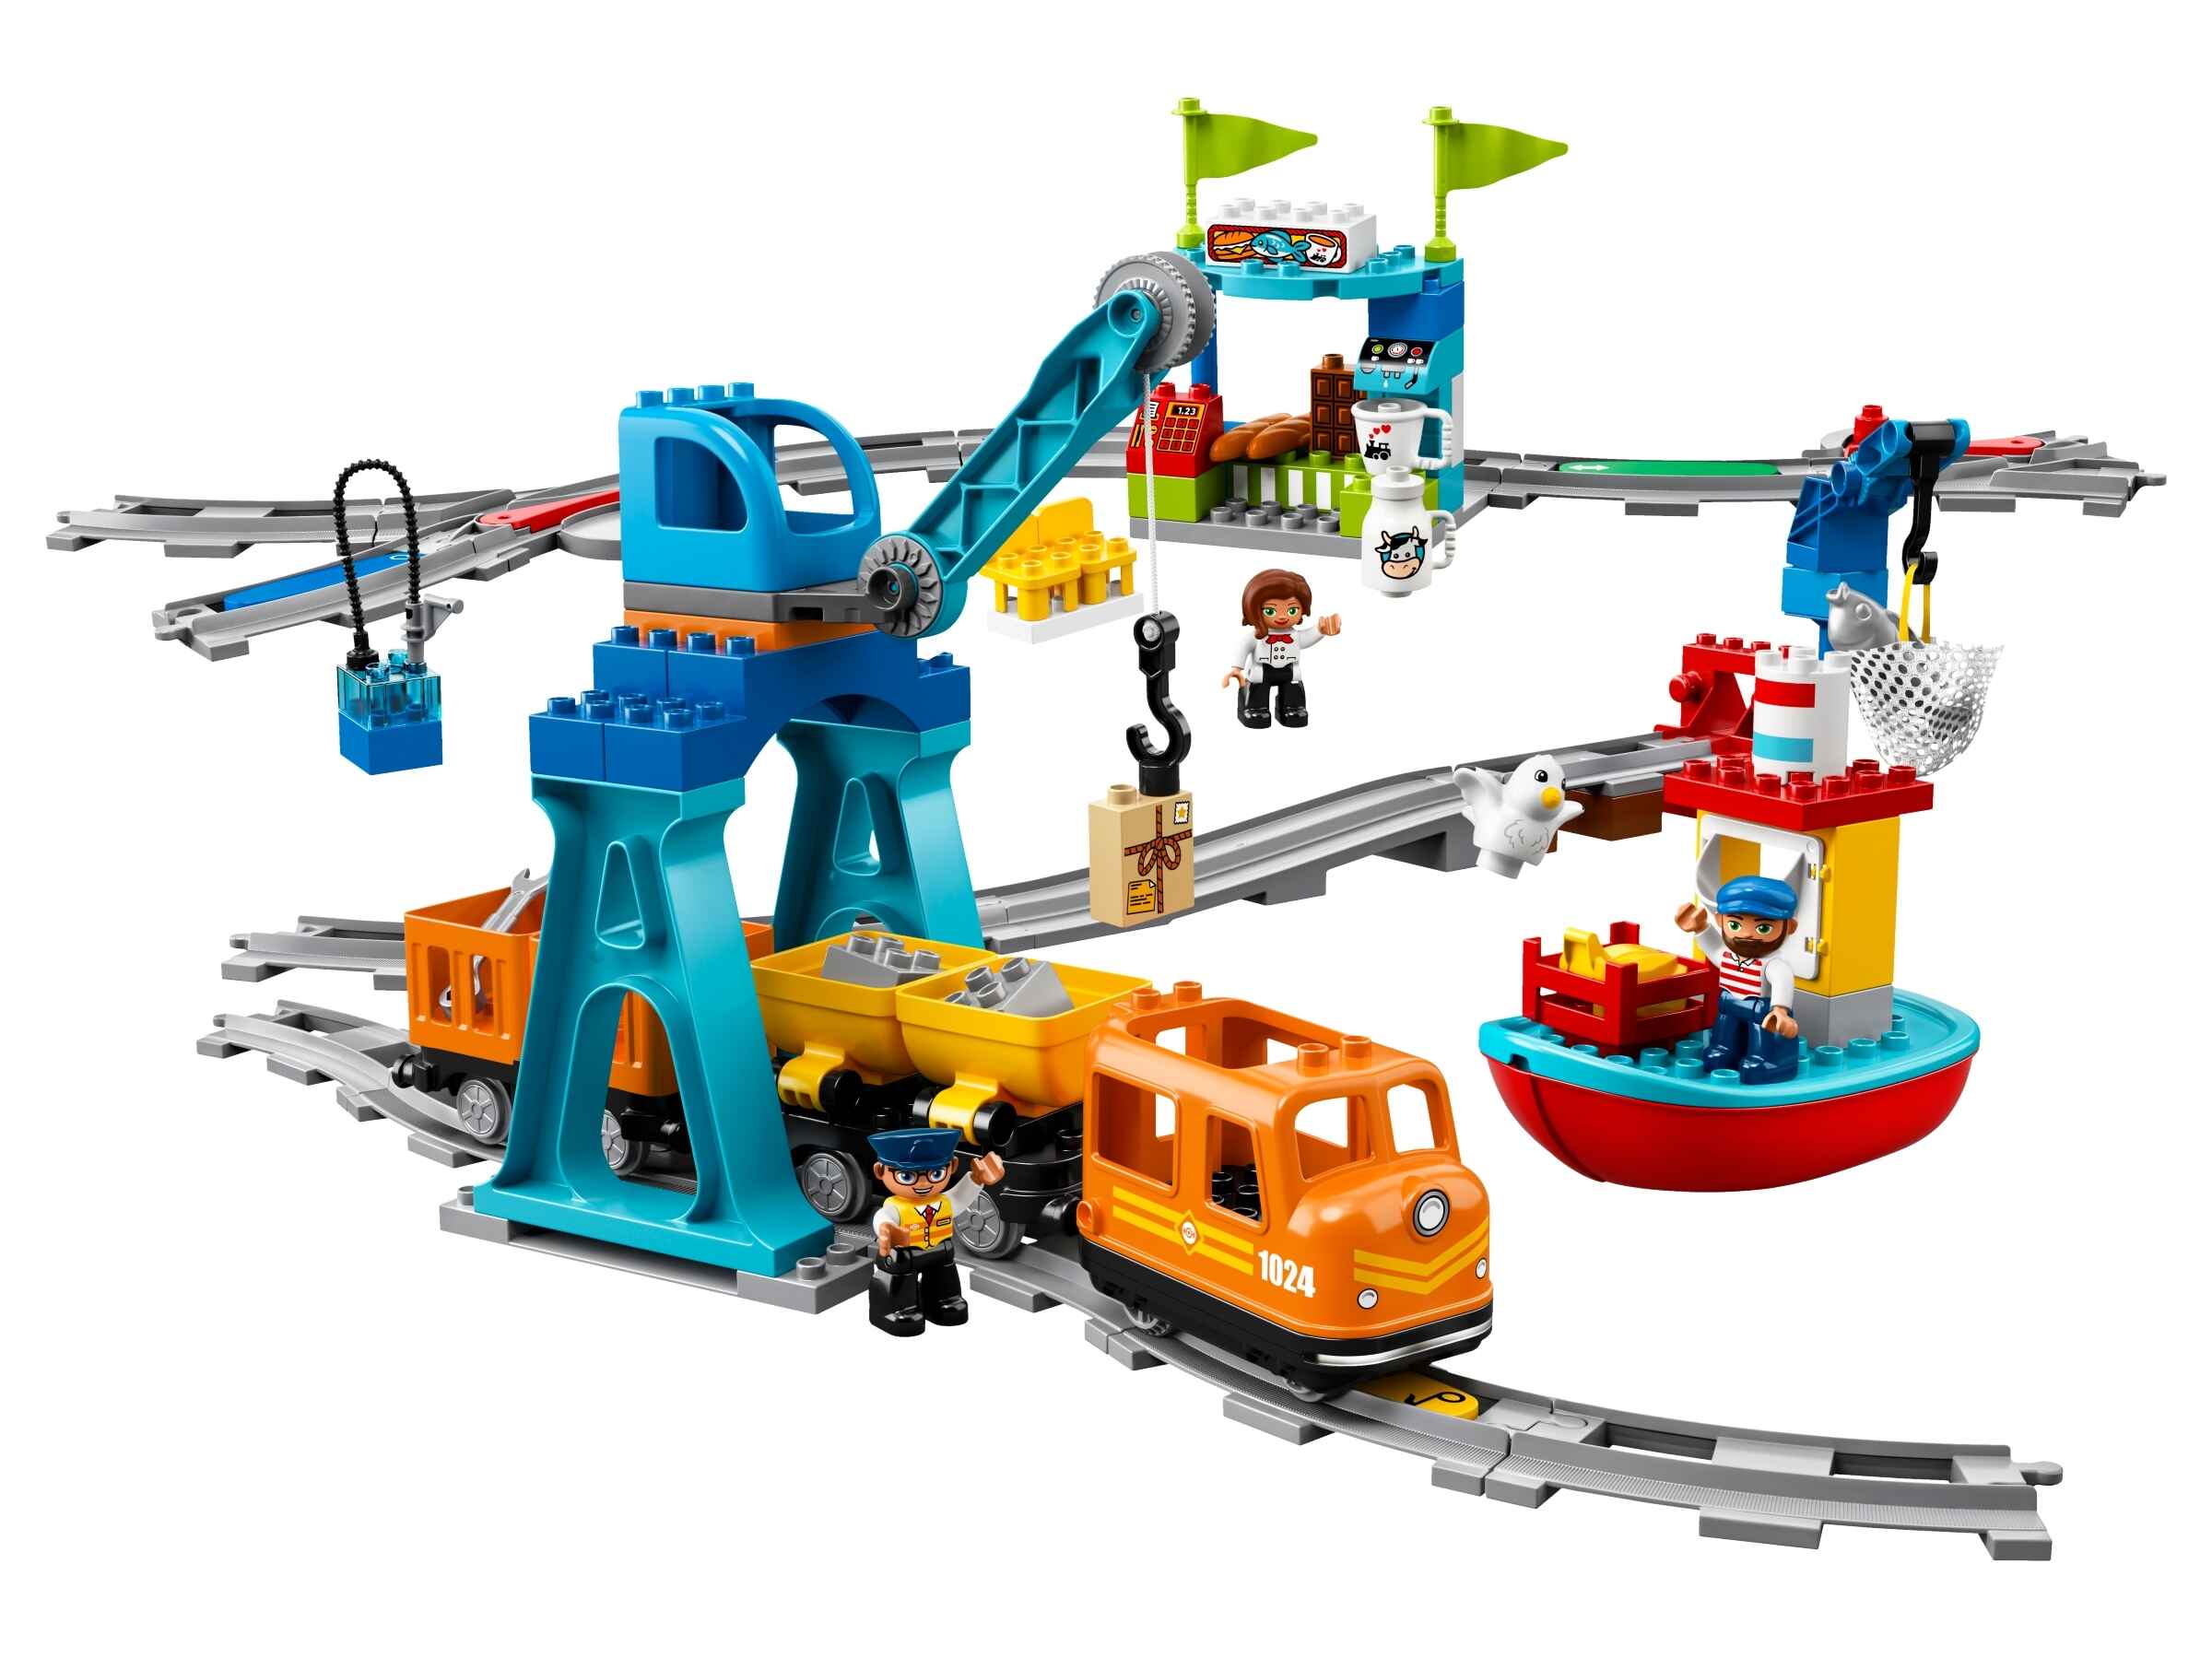 LEGO 10875 DUPLO Güterzug, Push u. Go-Lok, 5 farbige Funktionssteine